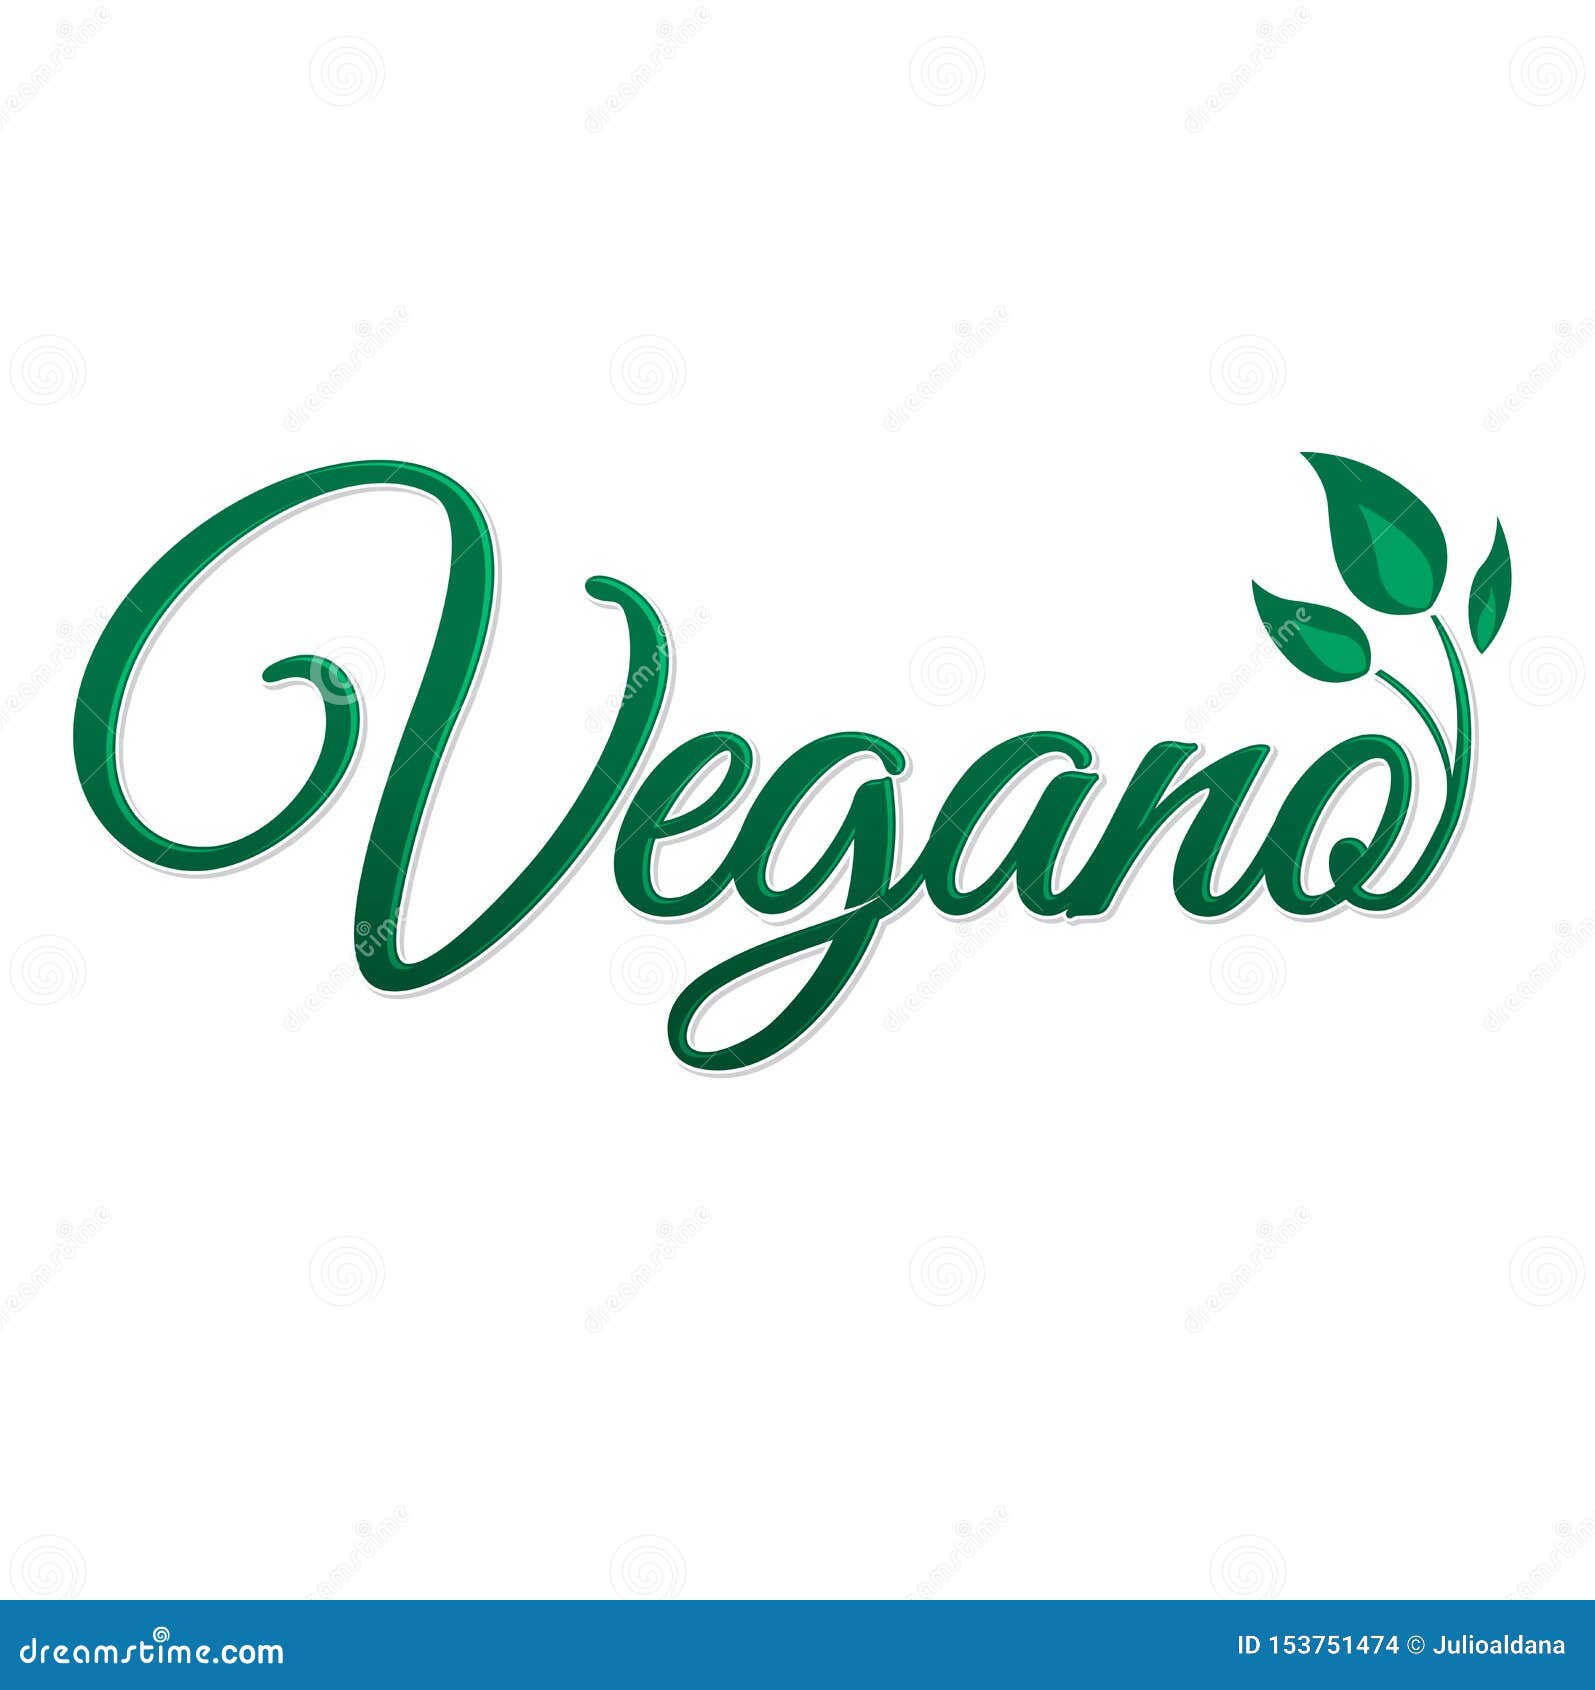 vegano, vegan spanish text,  icon , vegan  with leaves.